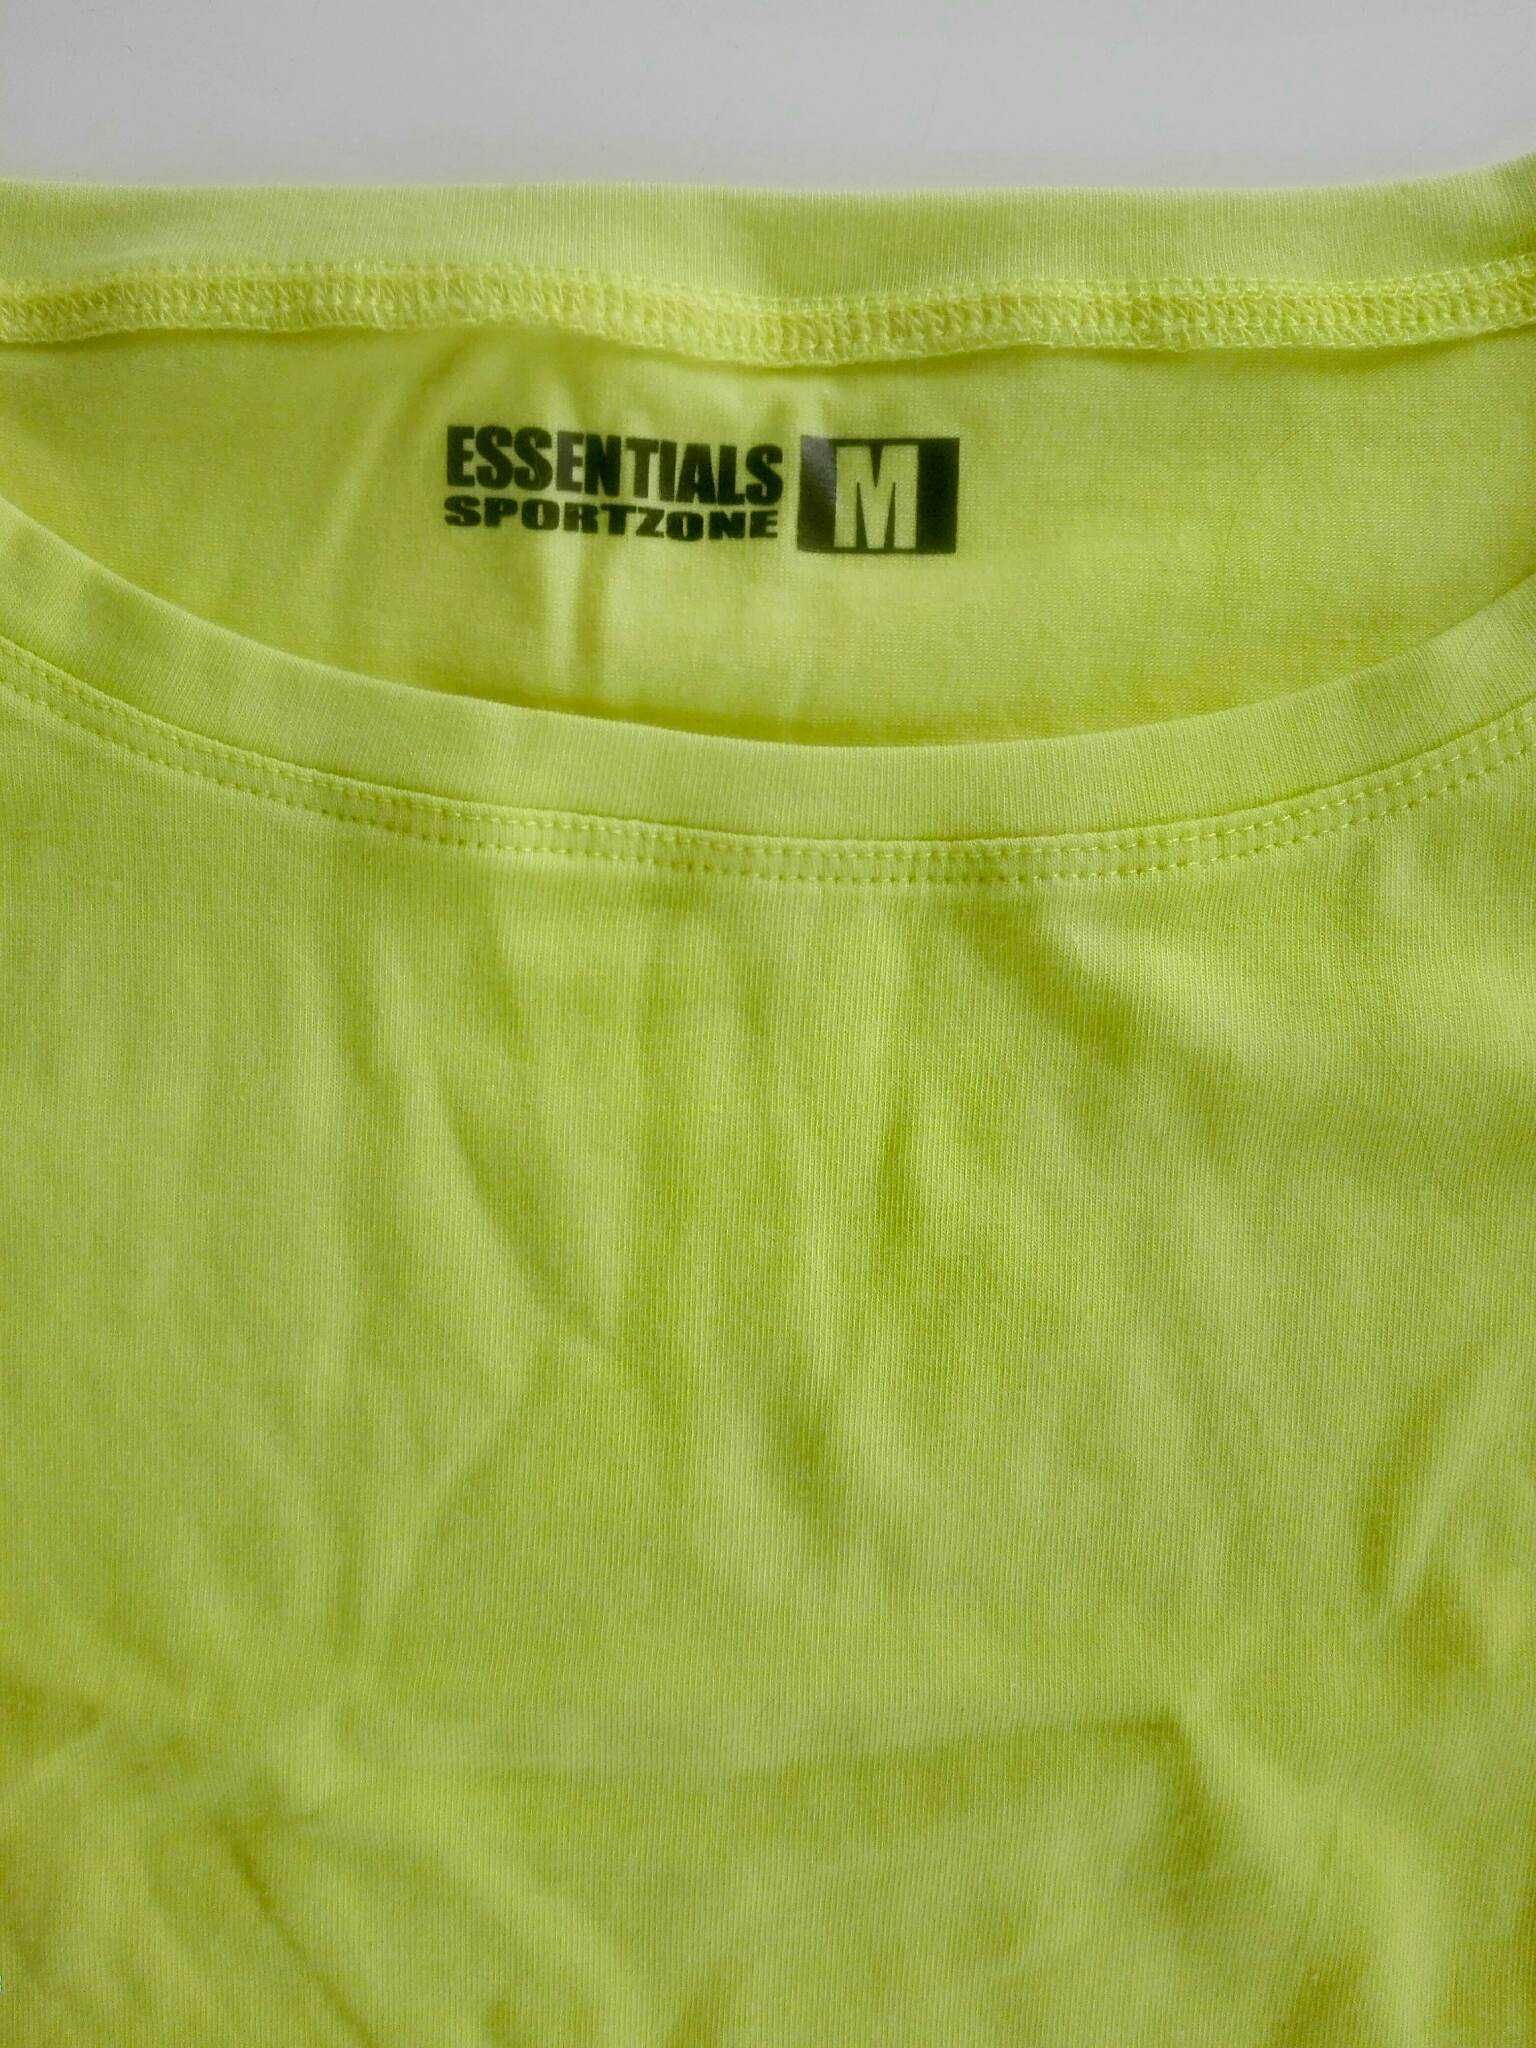 T-tshirt verde choque marca essentials sportzone tamanho m